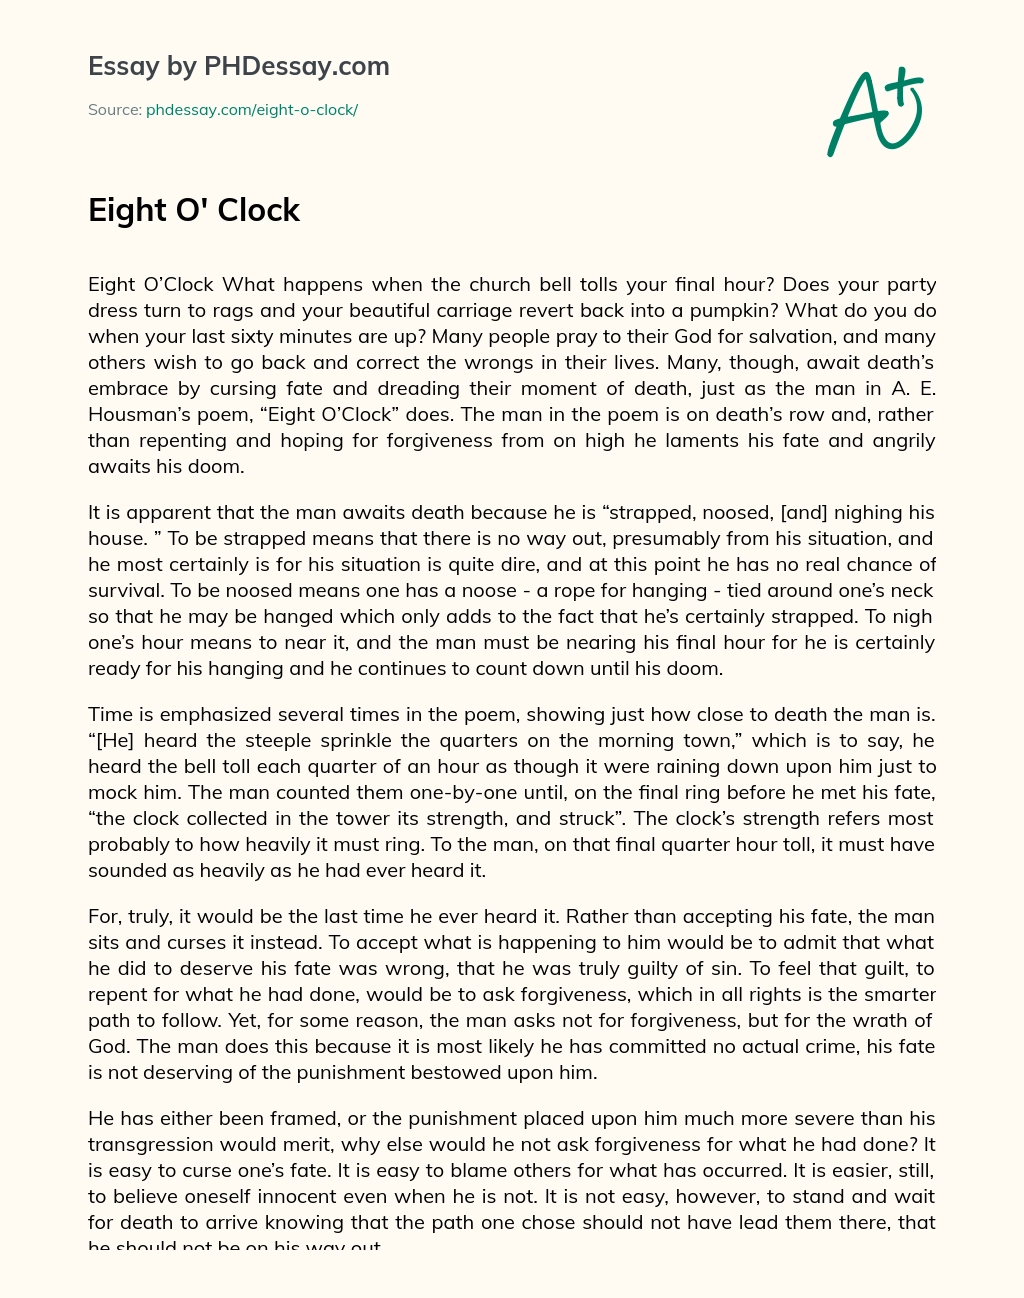 Eight O’ Clock essay